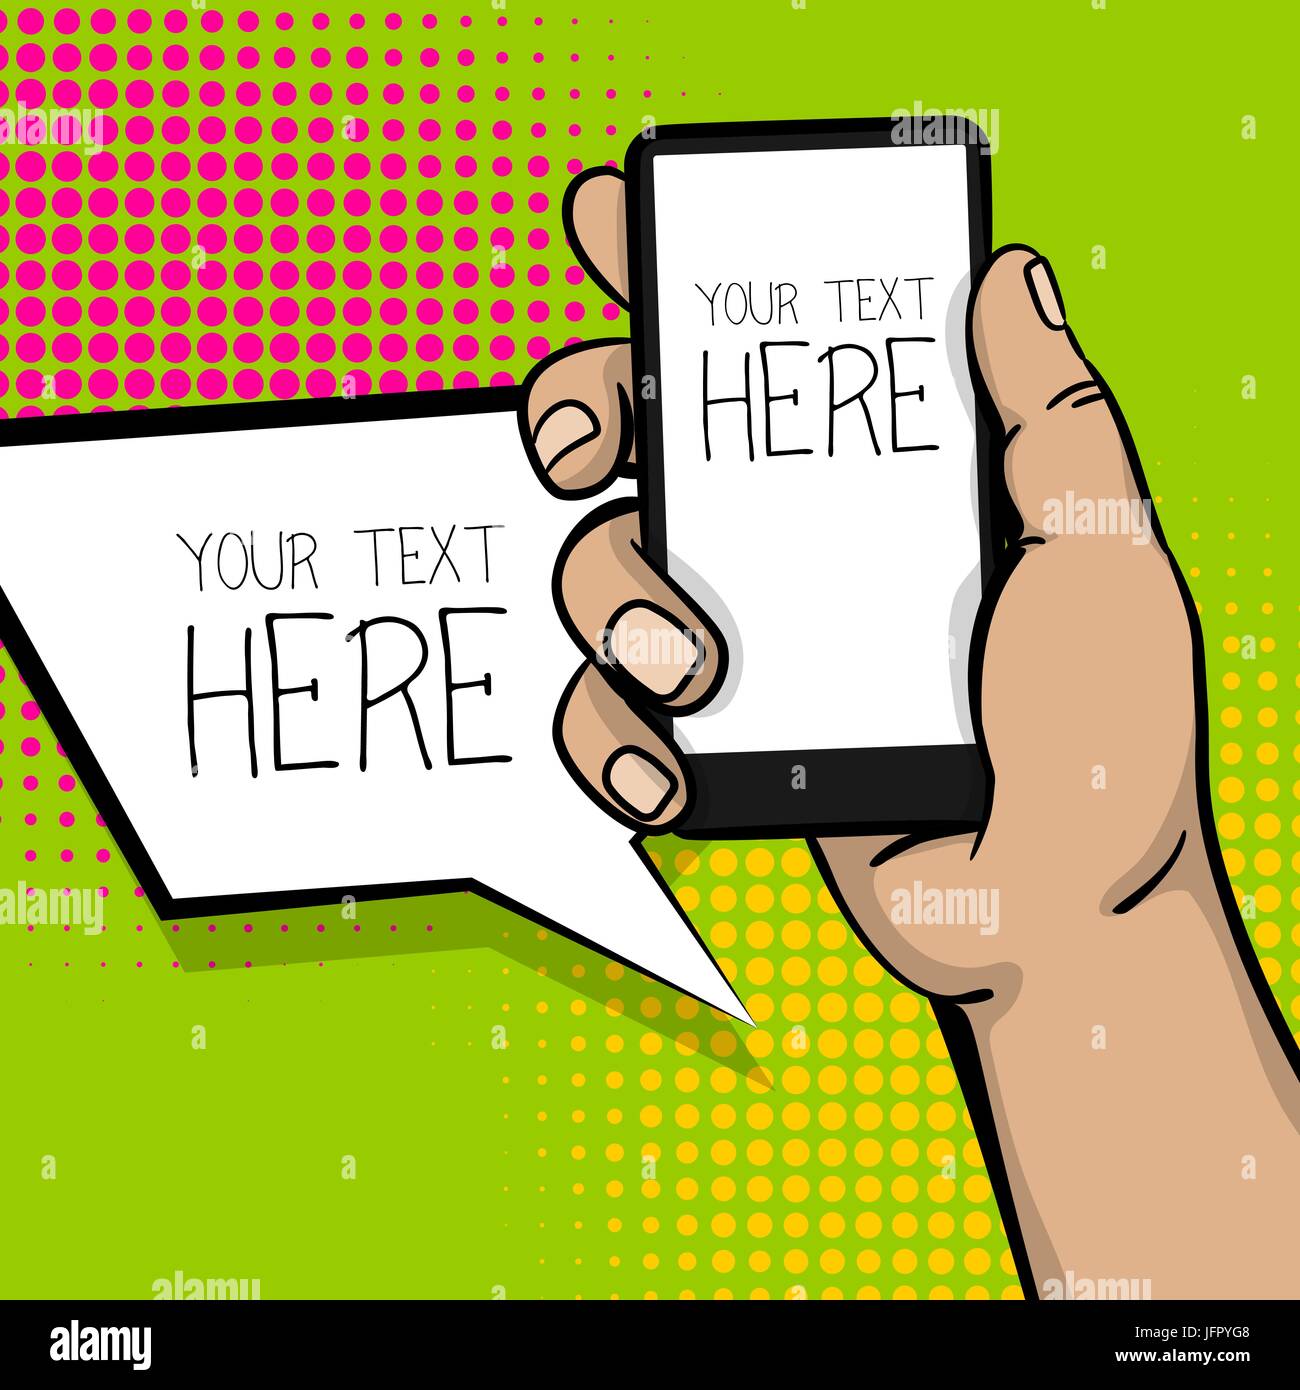 Pop art comic text cartoon man hand hold smart phone touch screen. Human guy wow poster halftone dot background. Blank speech bubble advertisement bal Stock Vector